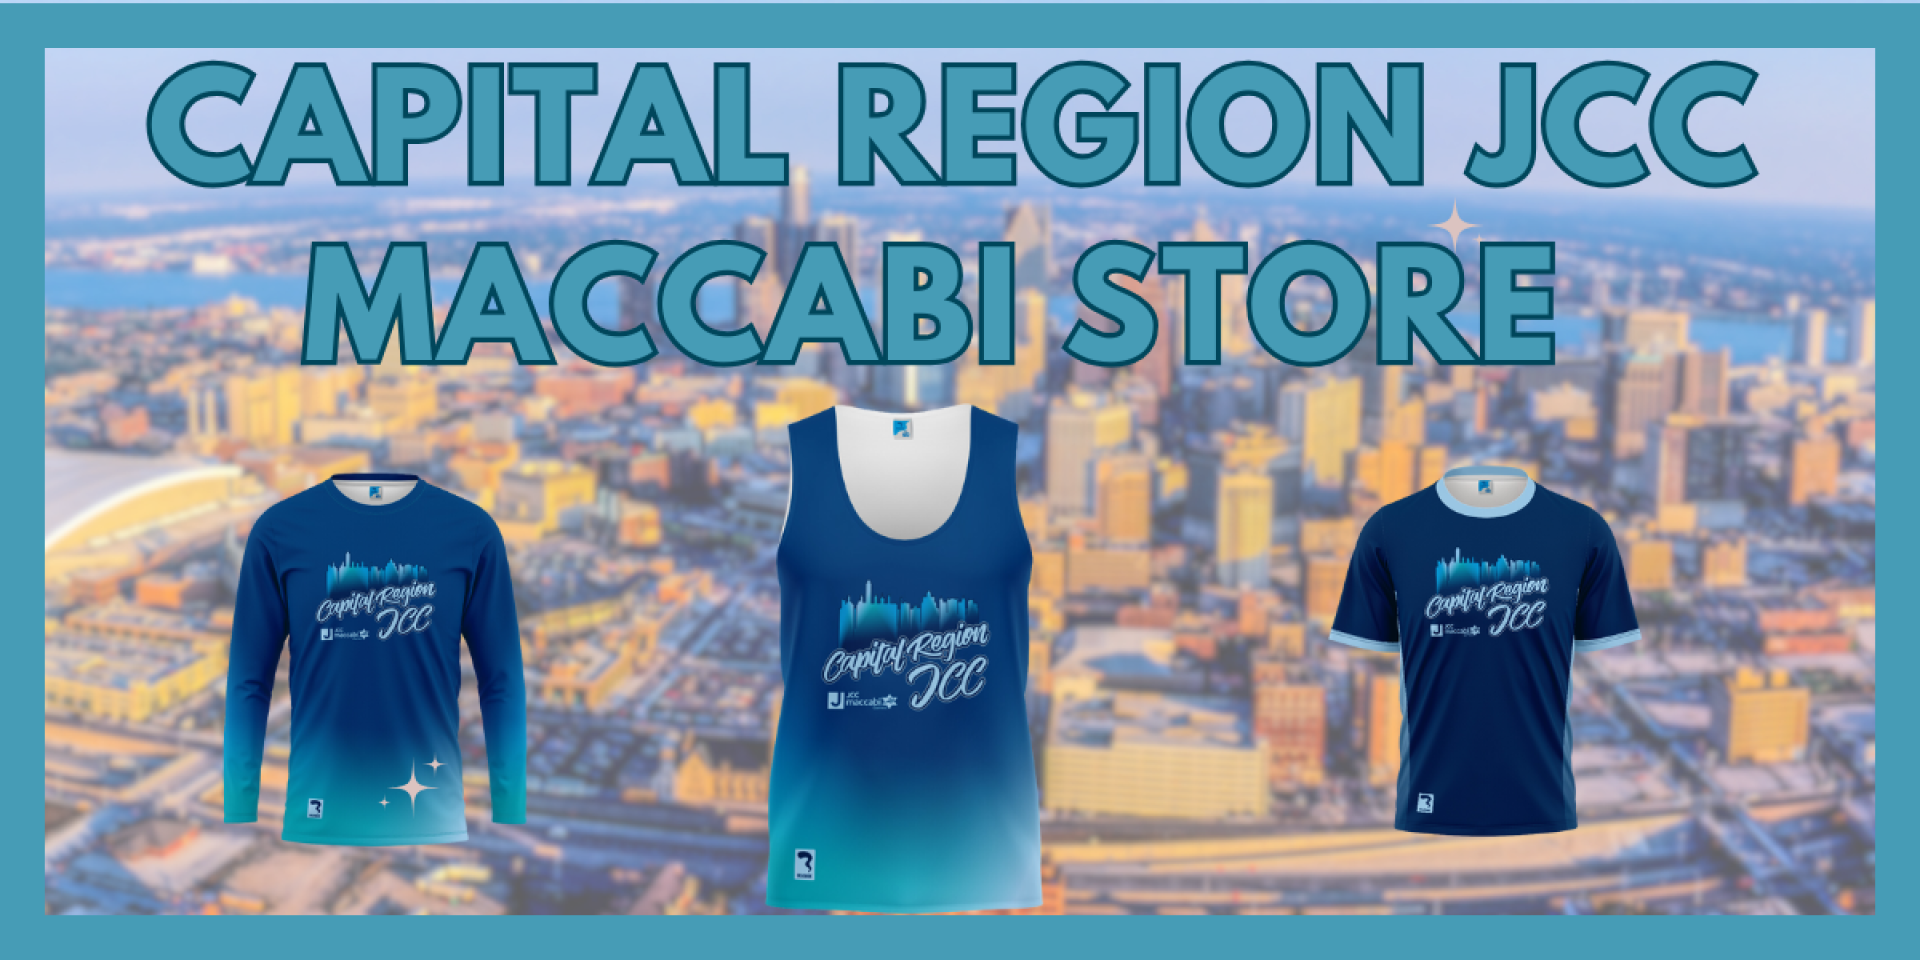 Capital Region JCC Maccabi Store